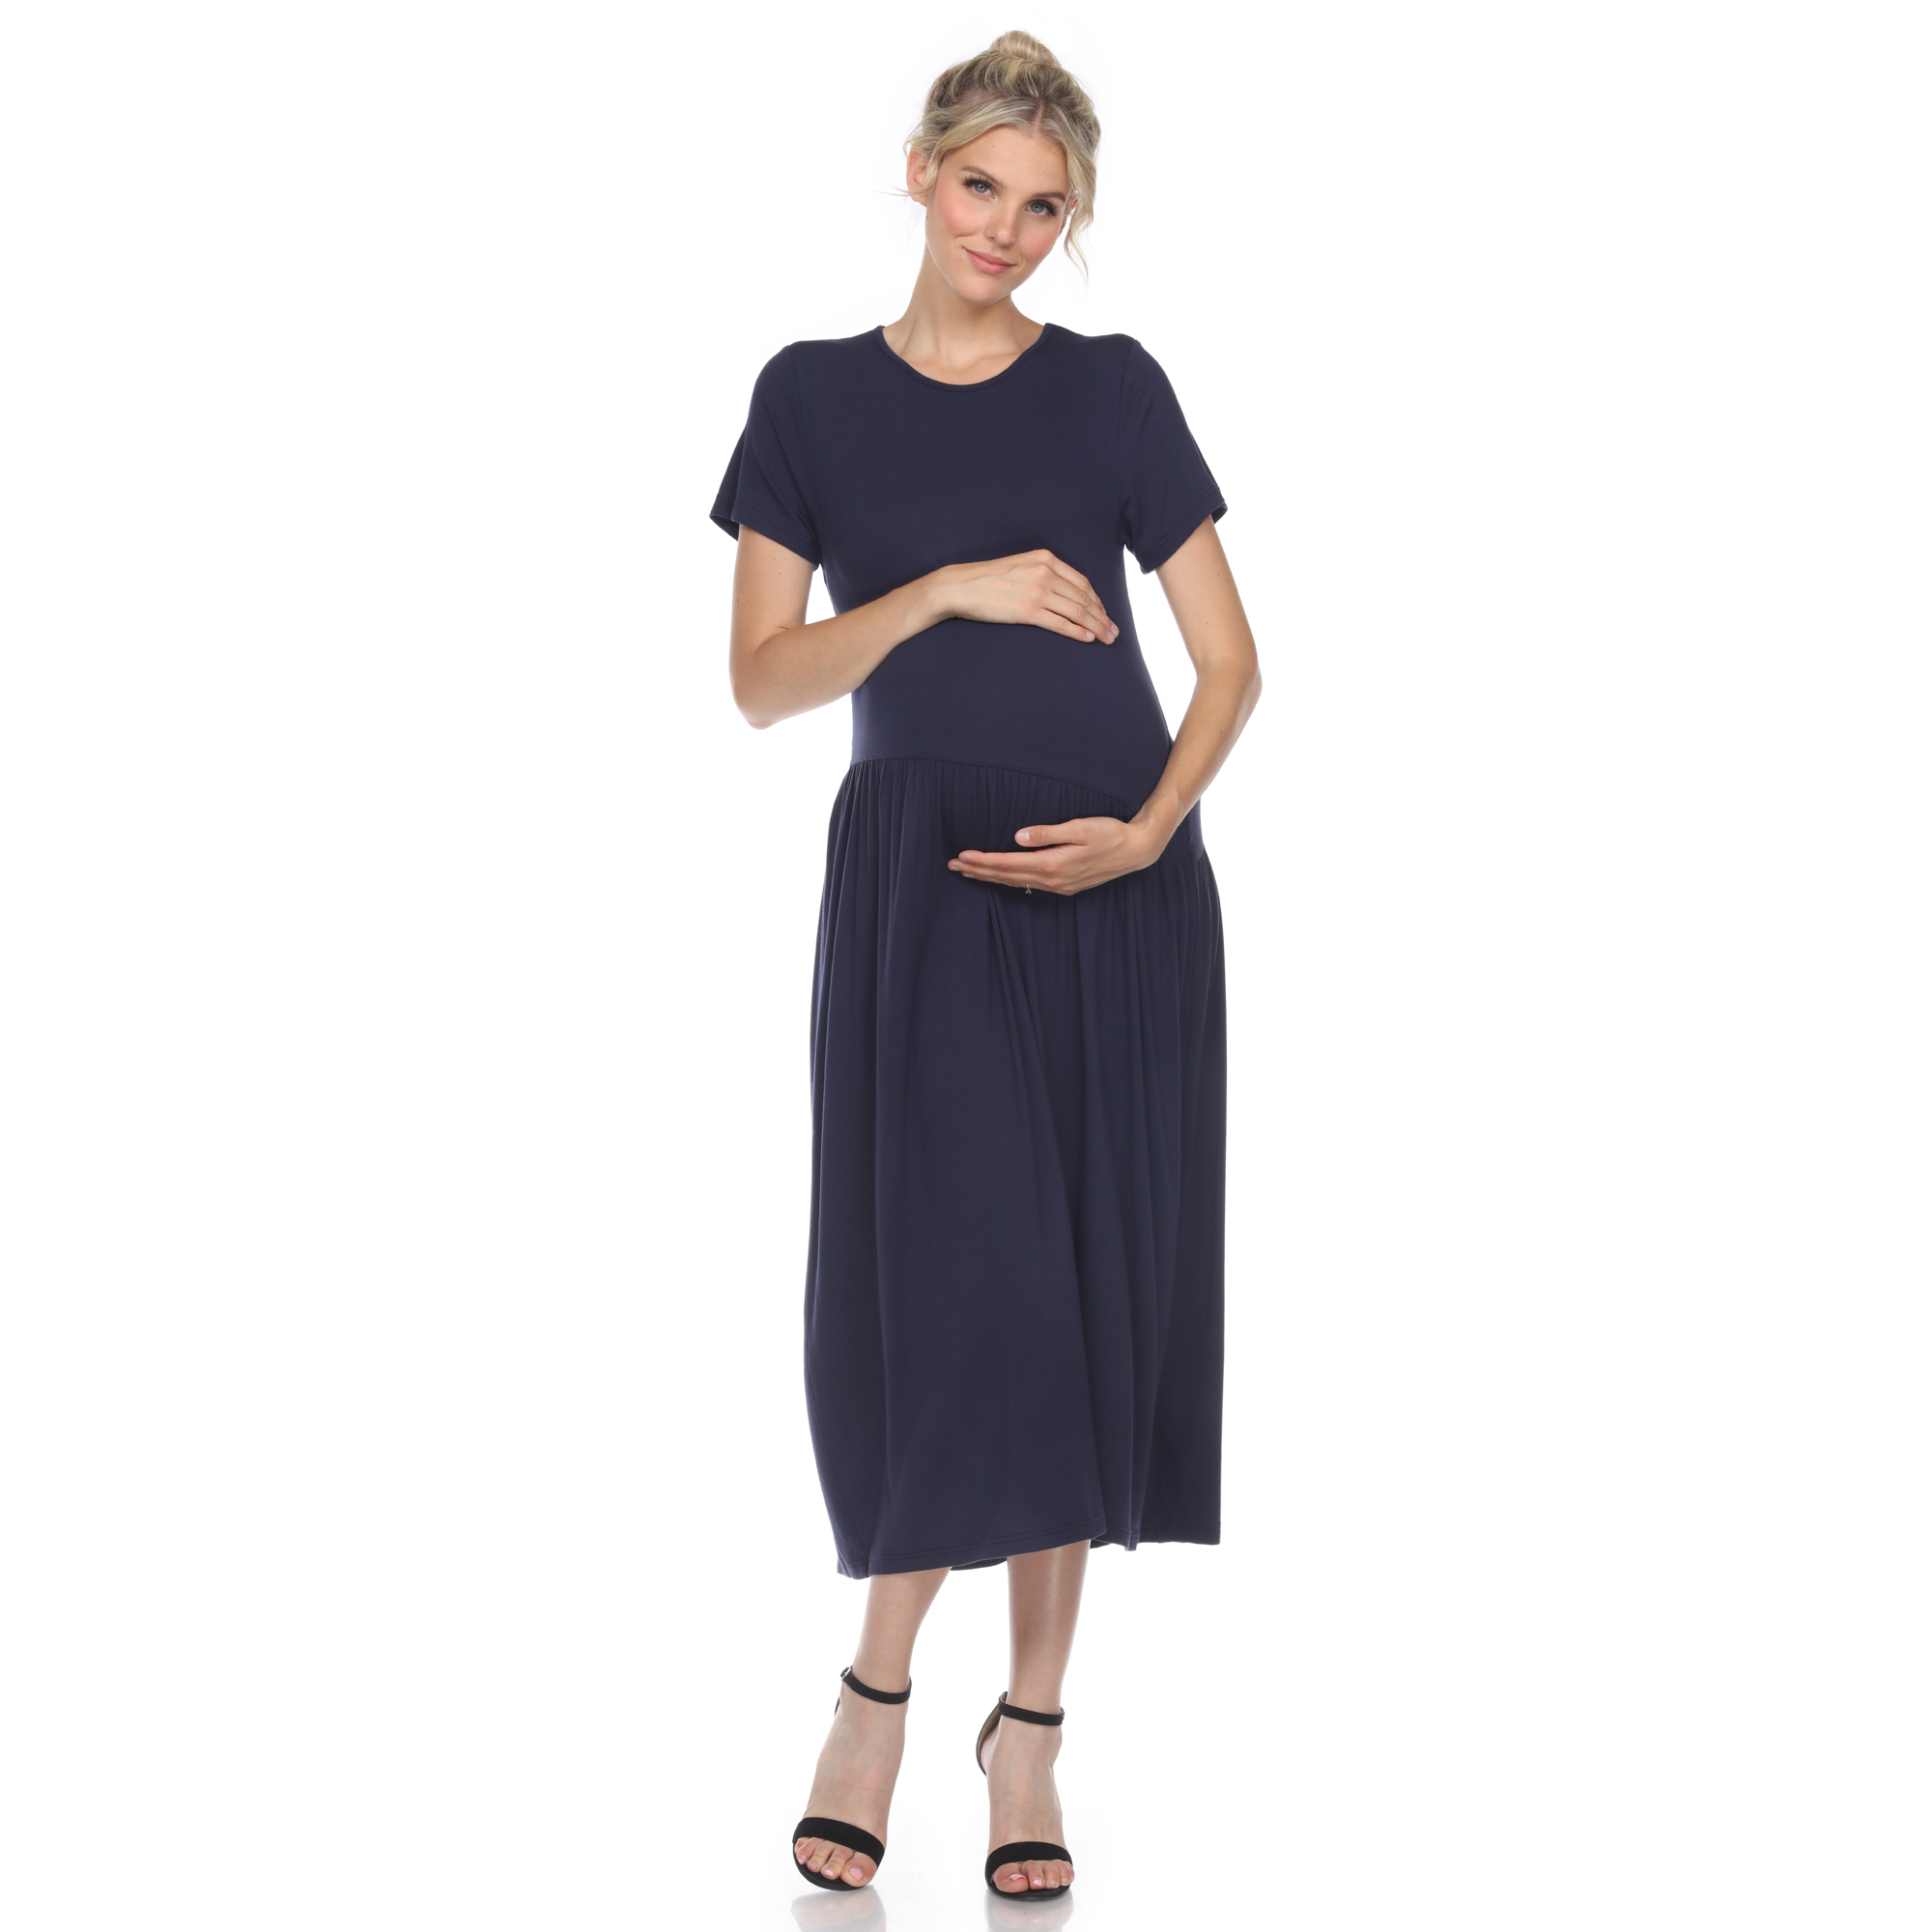 White Mark Womenâs Maternity Short Sleeve Maxi Dress - Navy, 3X